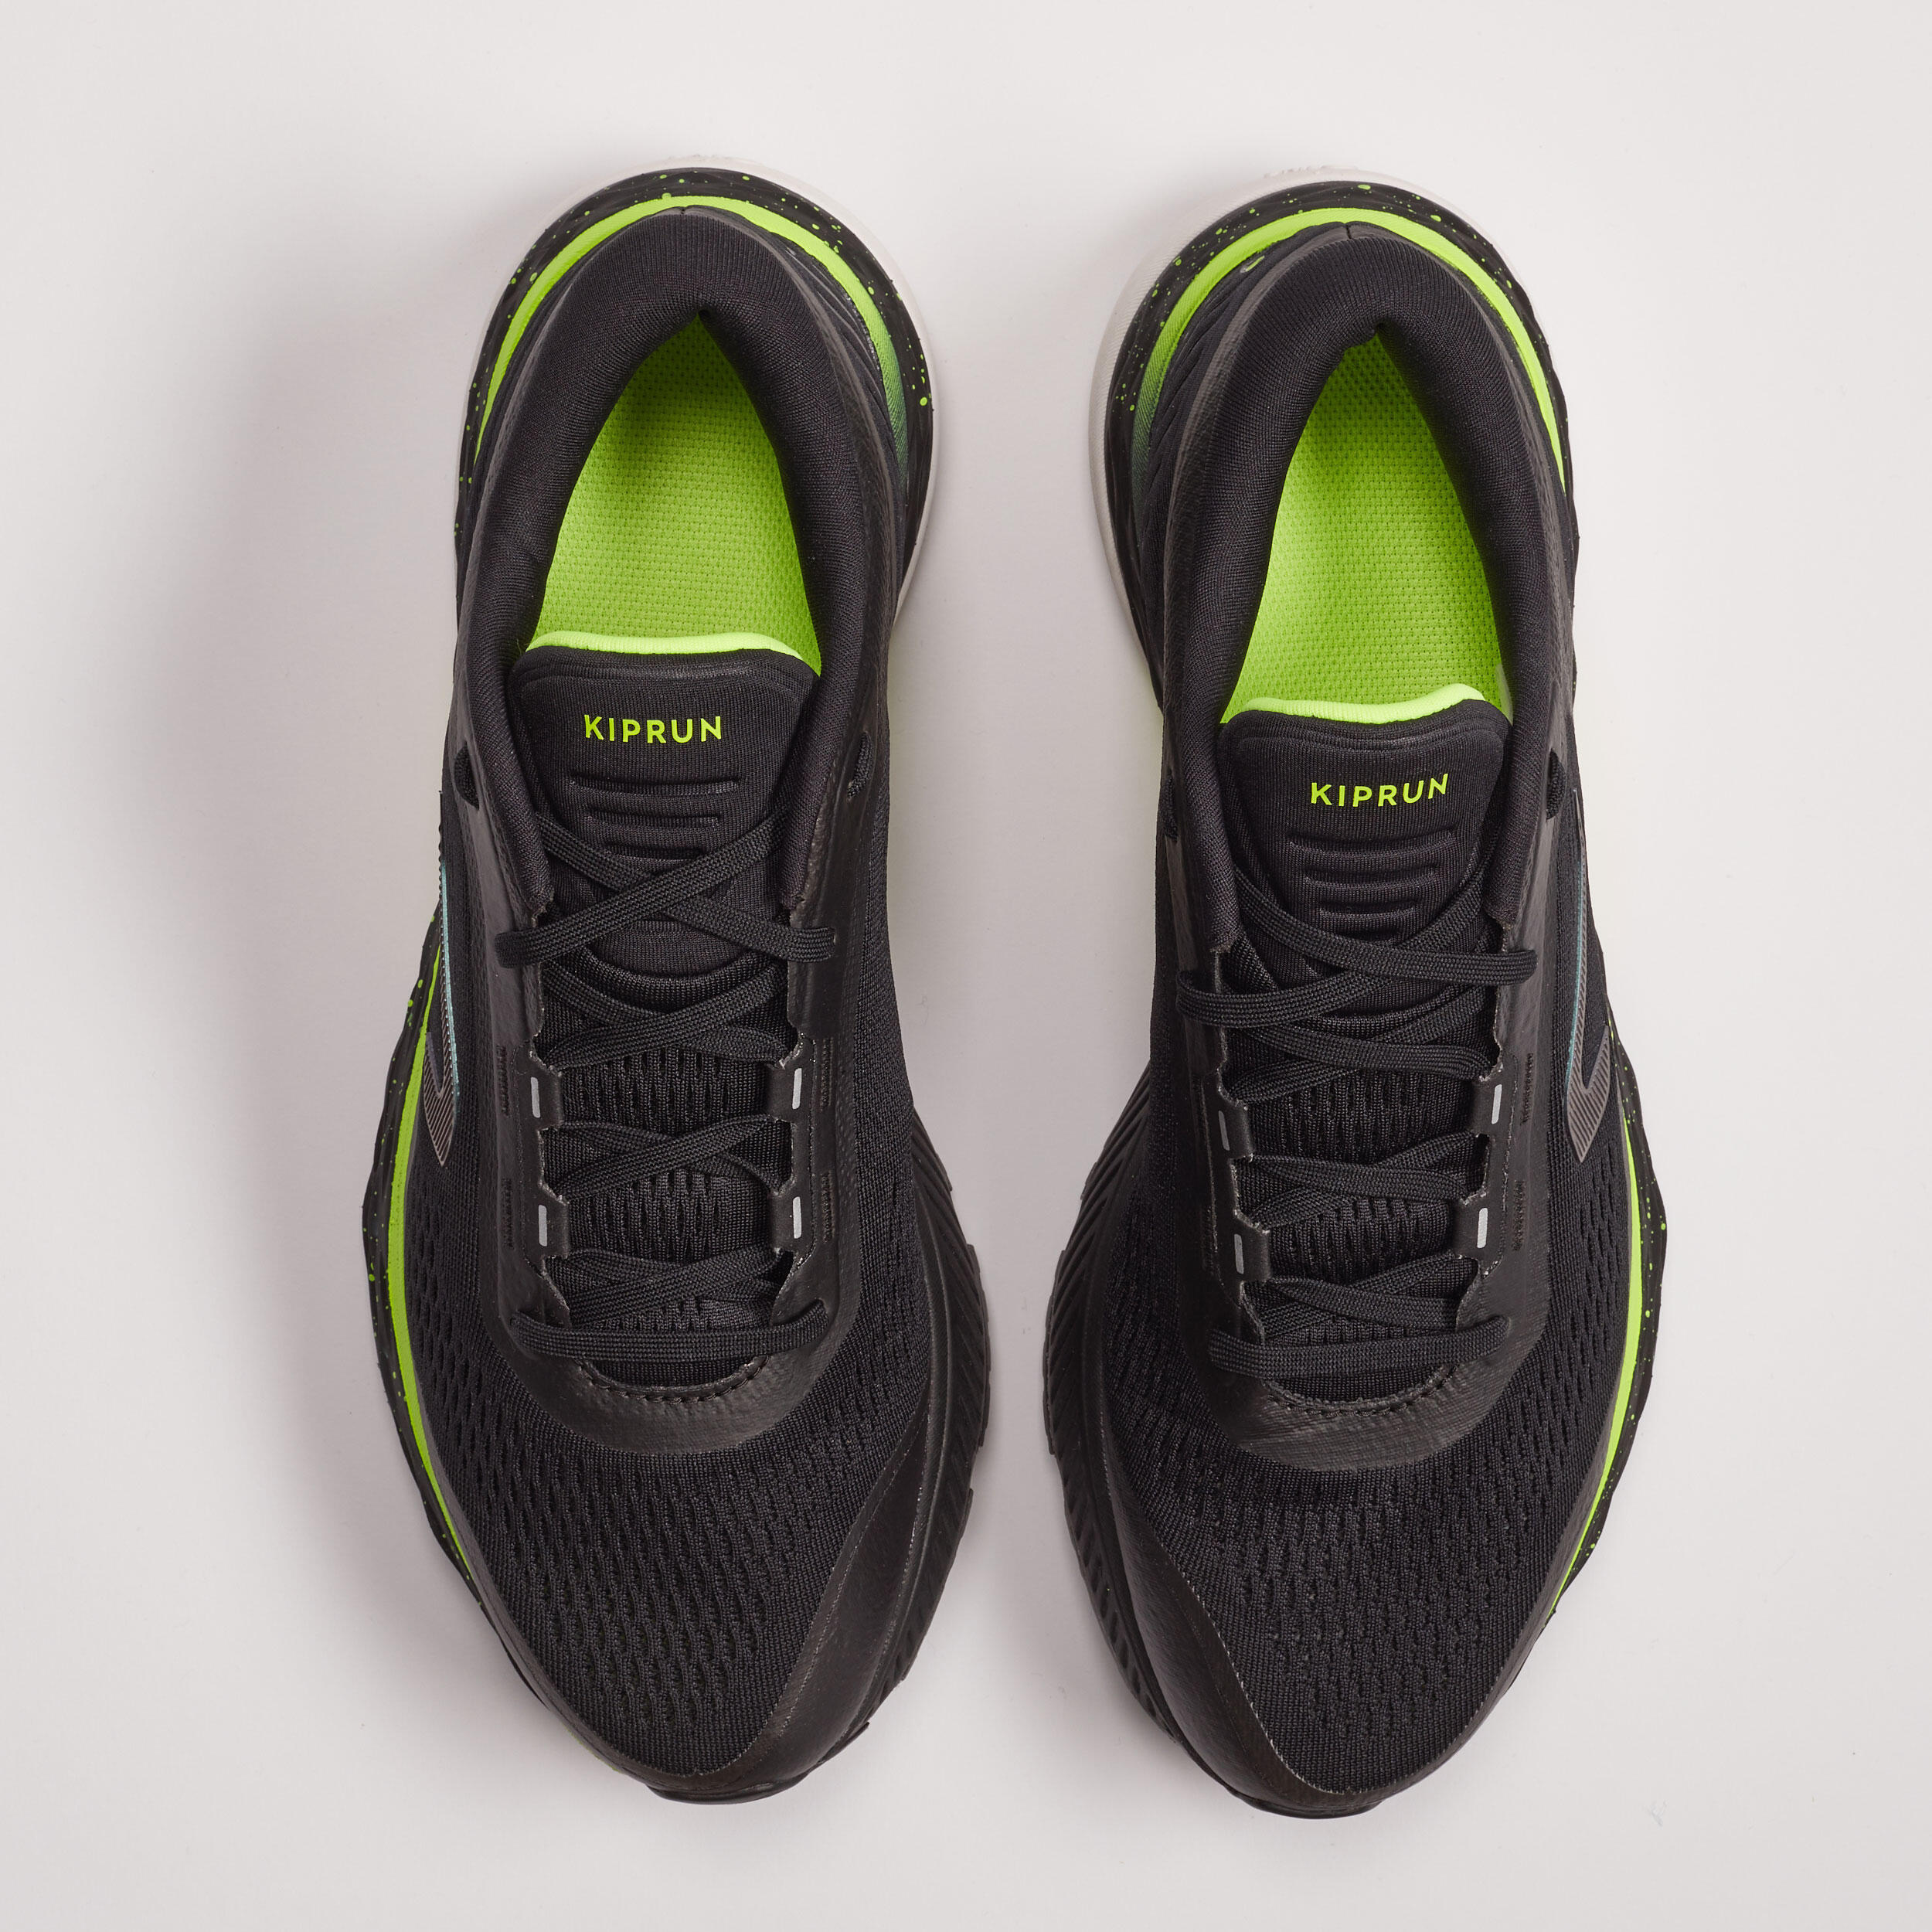 Kiprun KS 500 Men's Running Shoes - black yellow 6/7